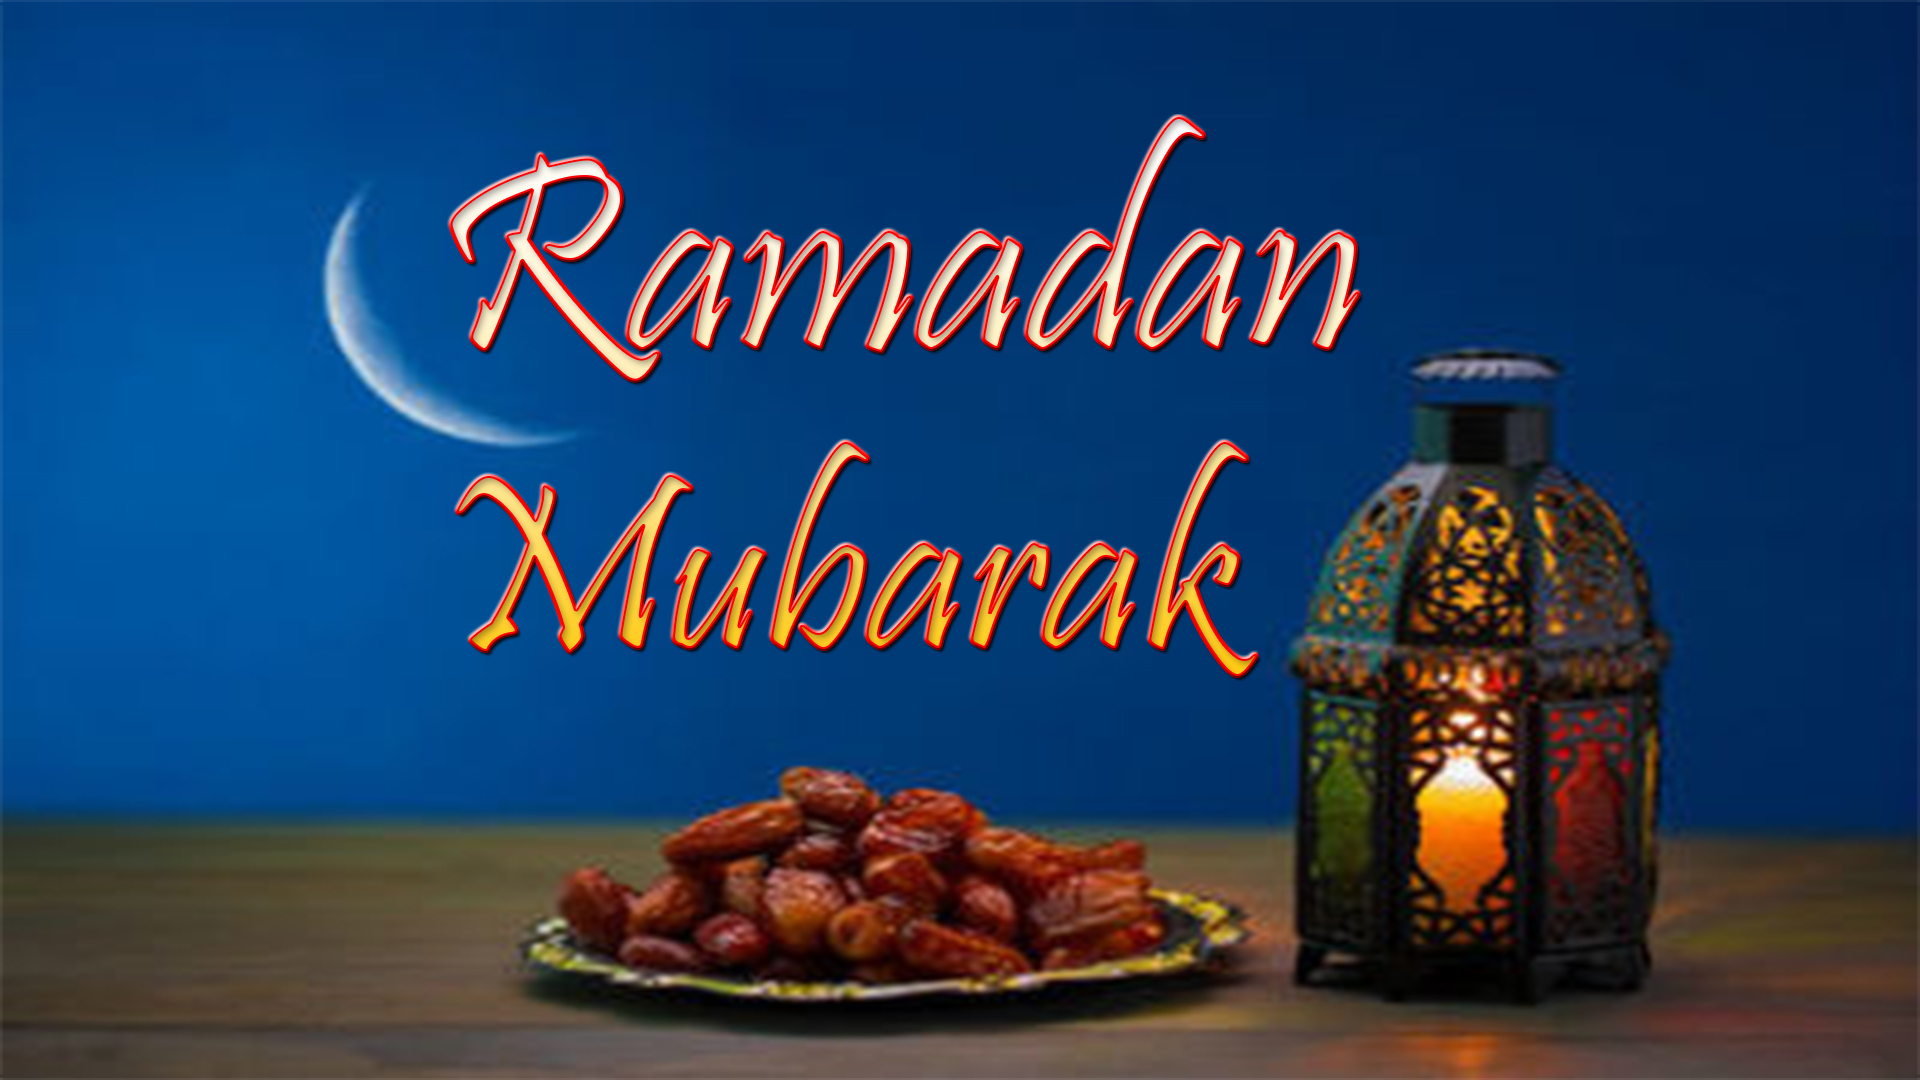 happy ramadan mubarak 2021 wishes images quotes messages status shayari  ramzan ki hardik shubhkamnaye on 12 april facebook whatsapp pics wallpaper  greetings sms smt  Ramadan Ramzan Mubarak Wishes 2021 Images Quotes